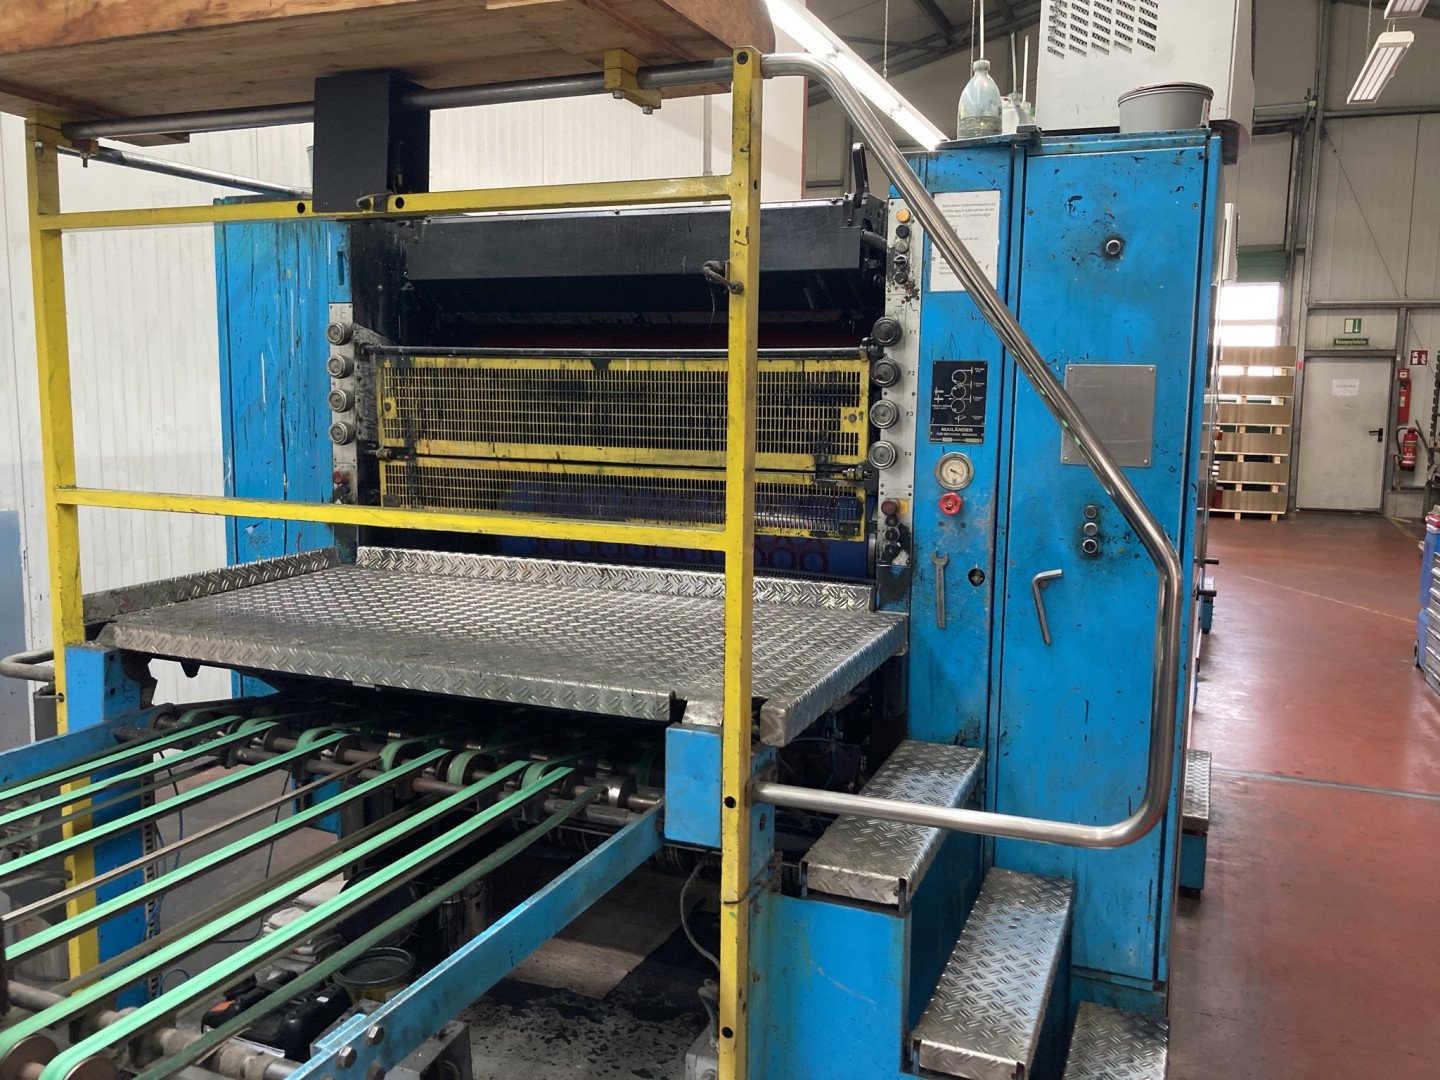 Mailander 122A tandem printing presses